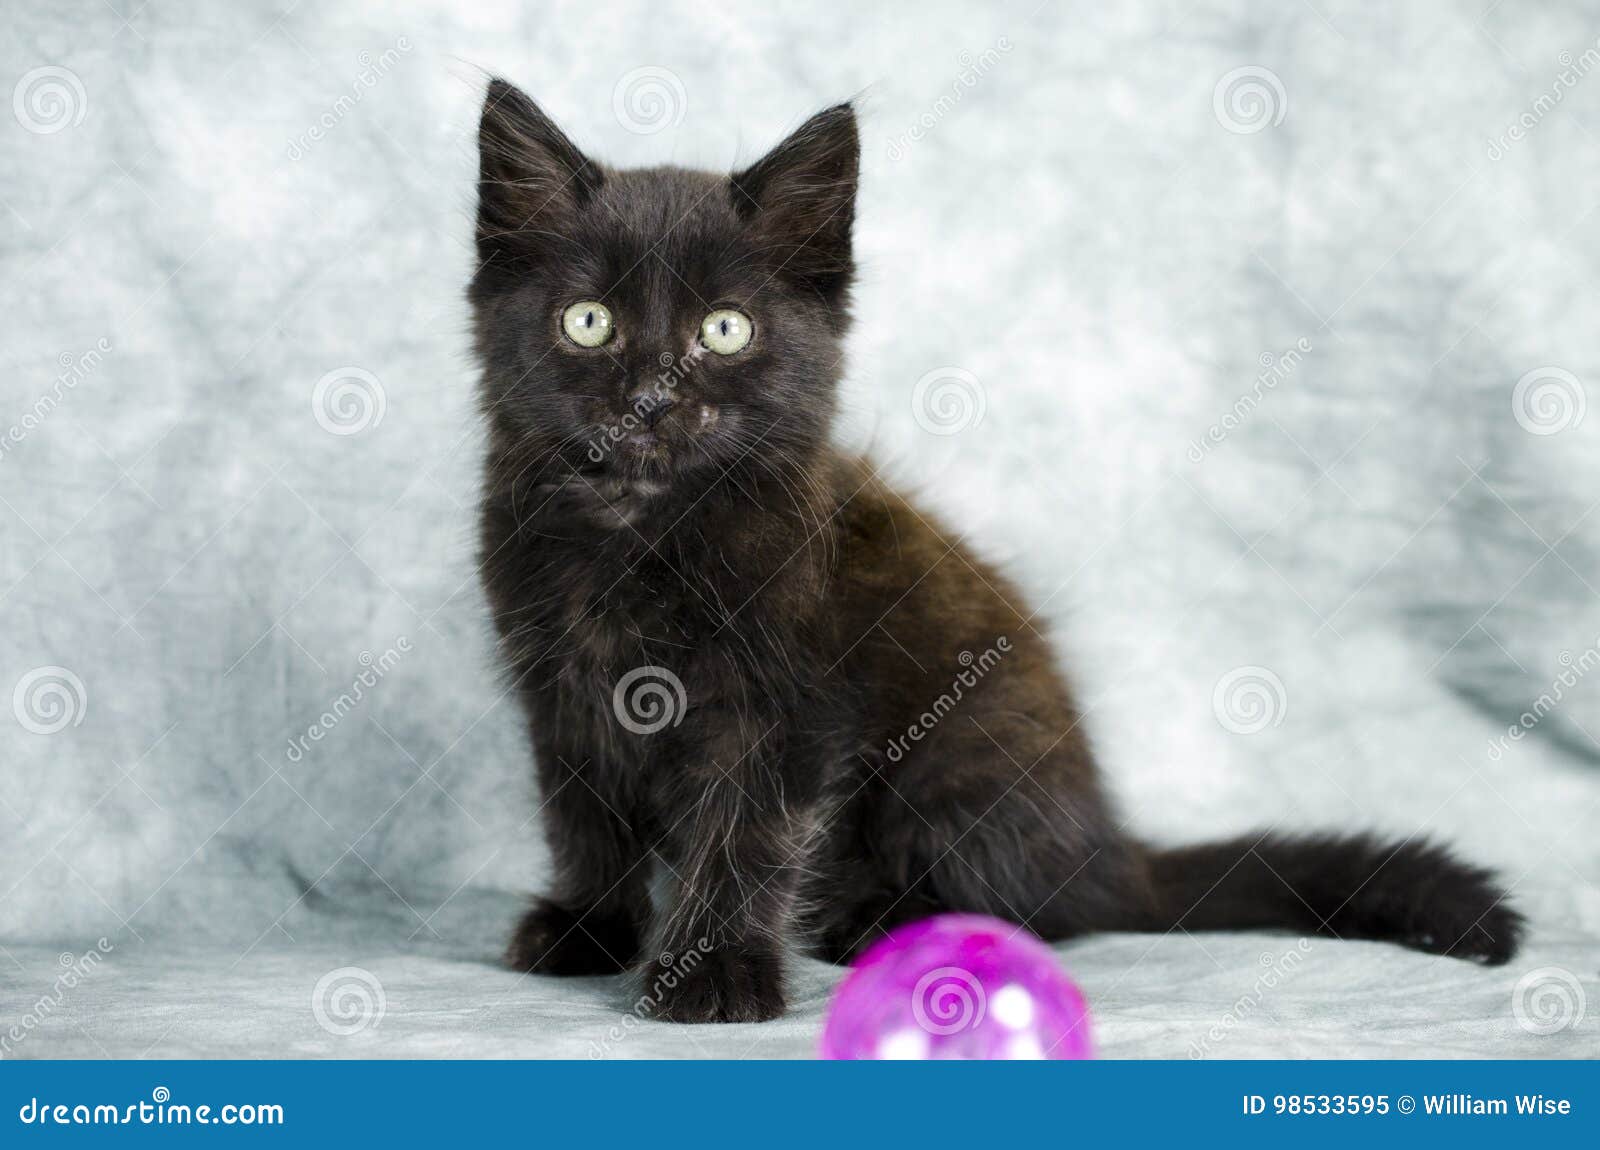 black long hair kitten playing with pink ball